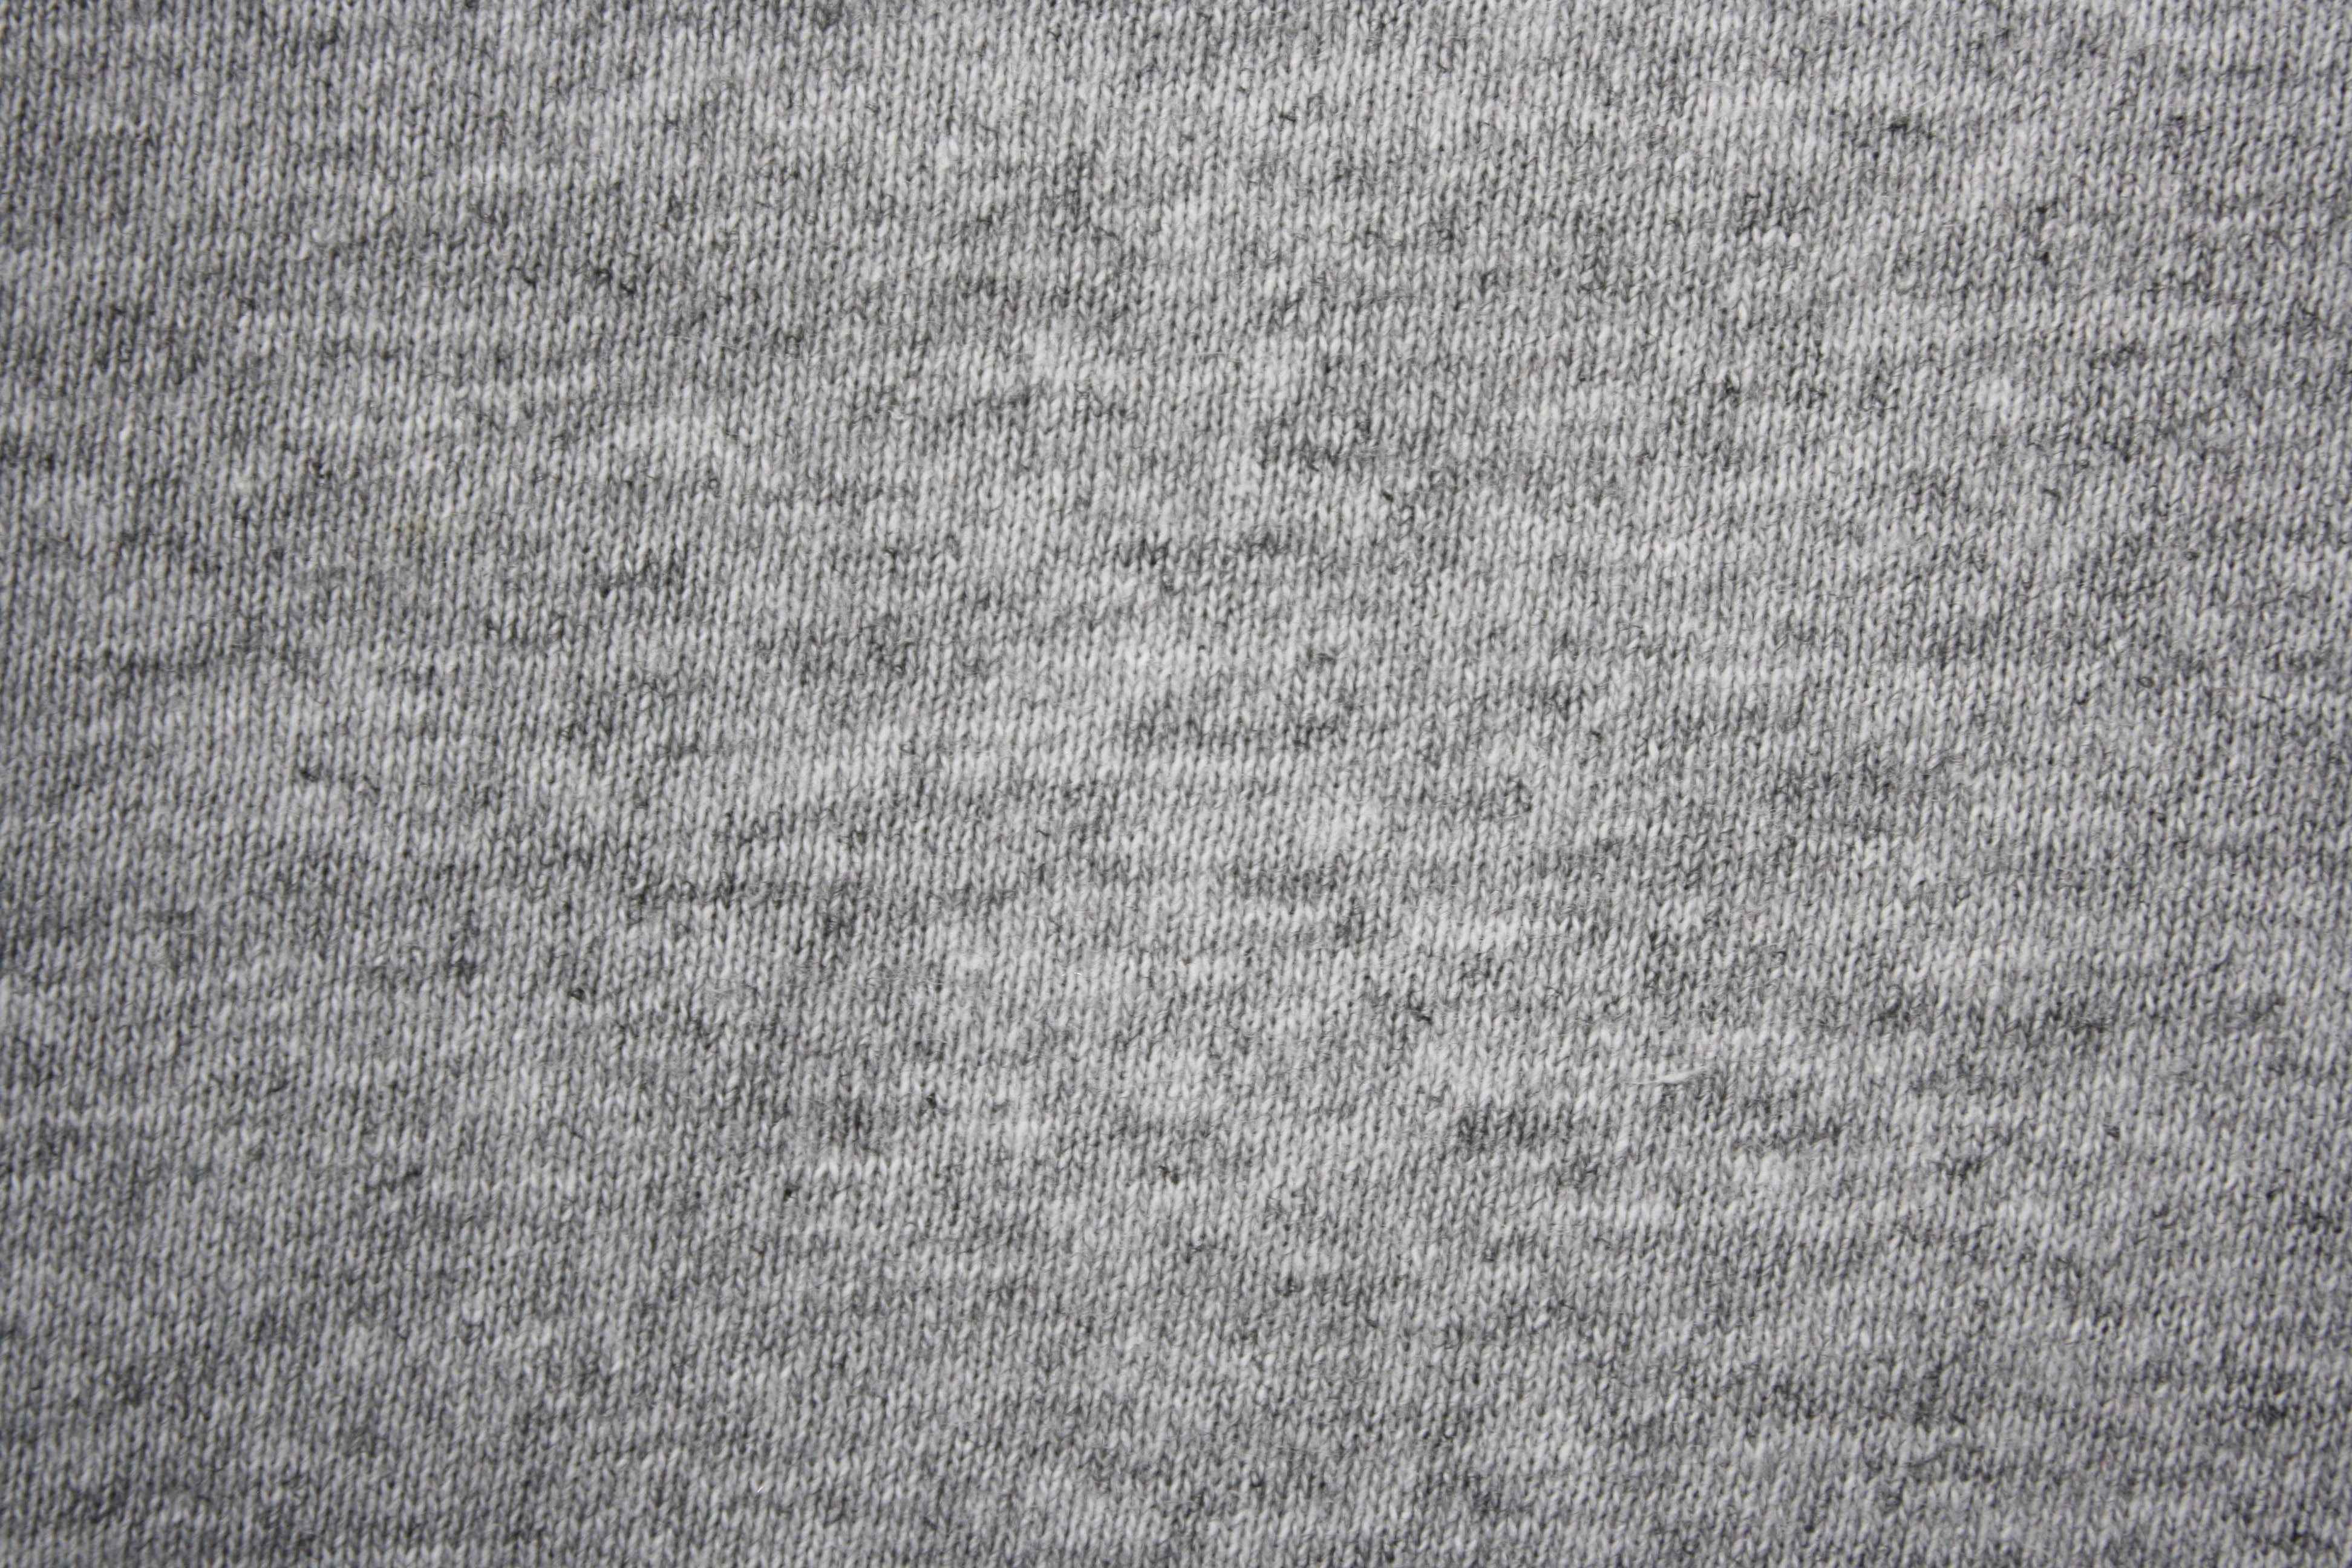 T-Shirt Fabric Texture